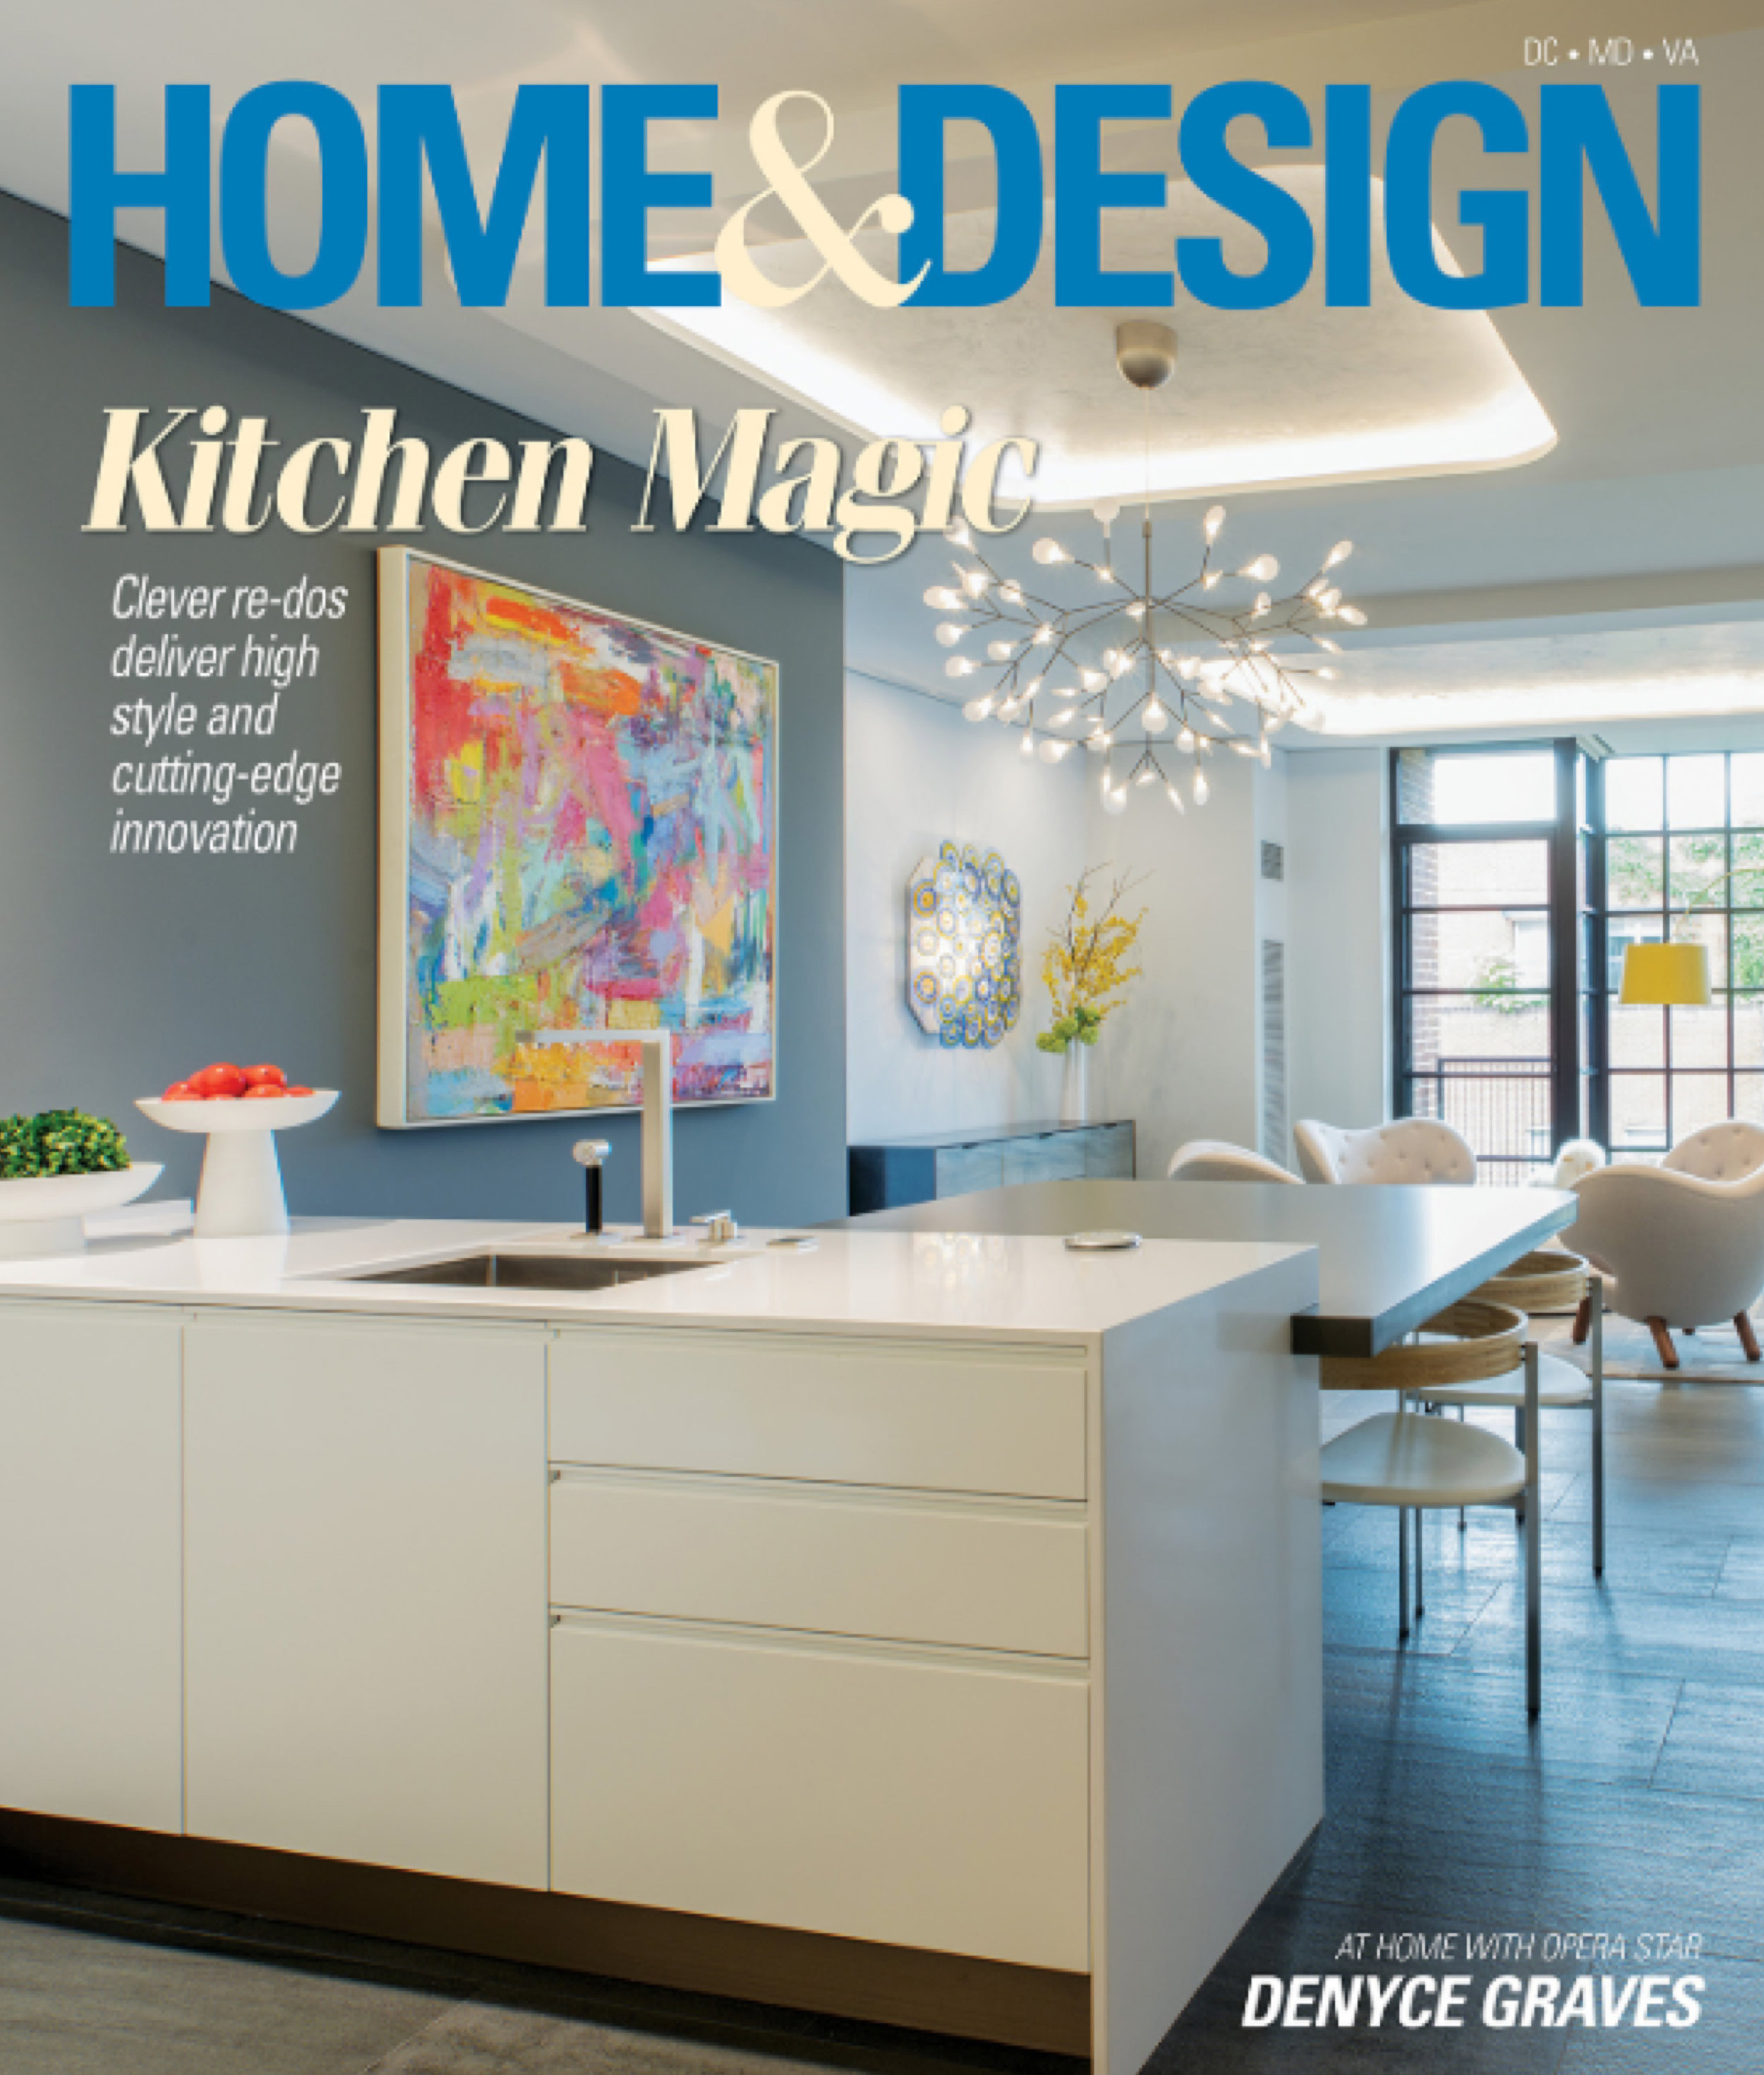 Home & Design Cover_Winter 2019.001.jpeg